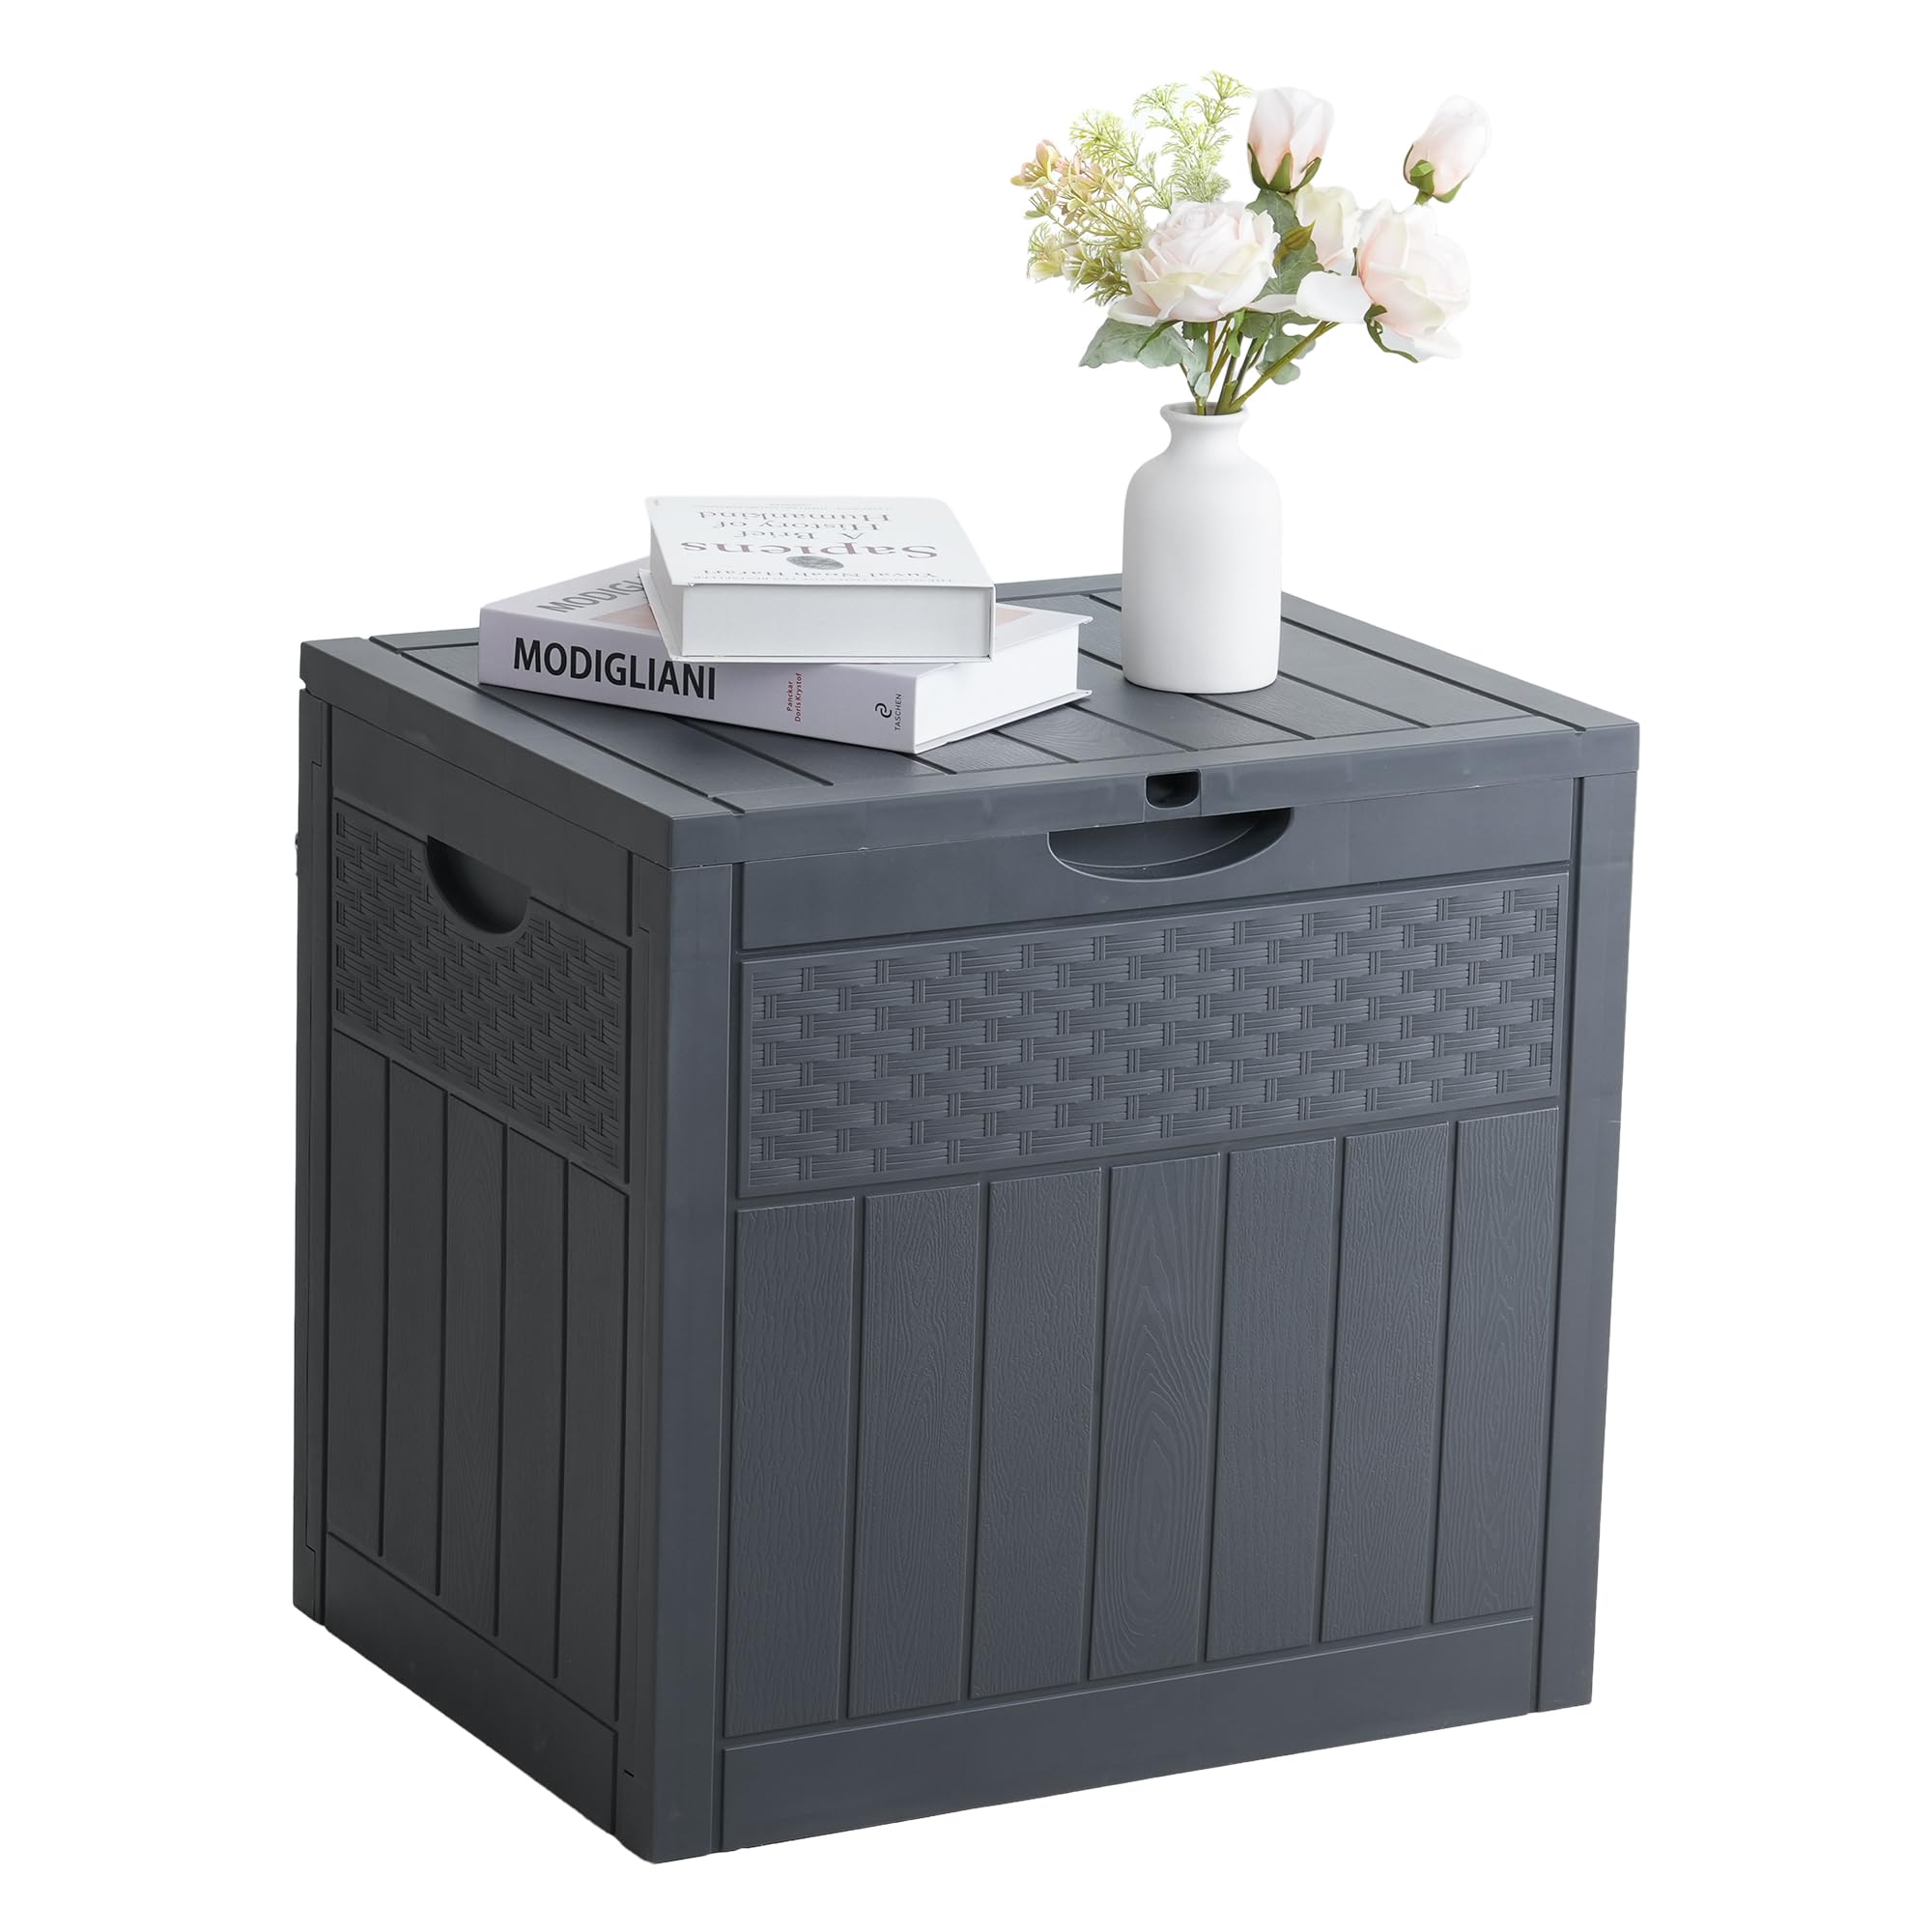 EHHLY 30 Gallon Deck Box, Small Outdoor Storage Box Waterproof, Grey